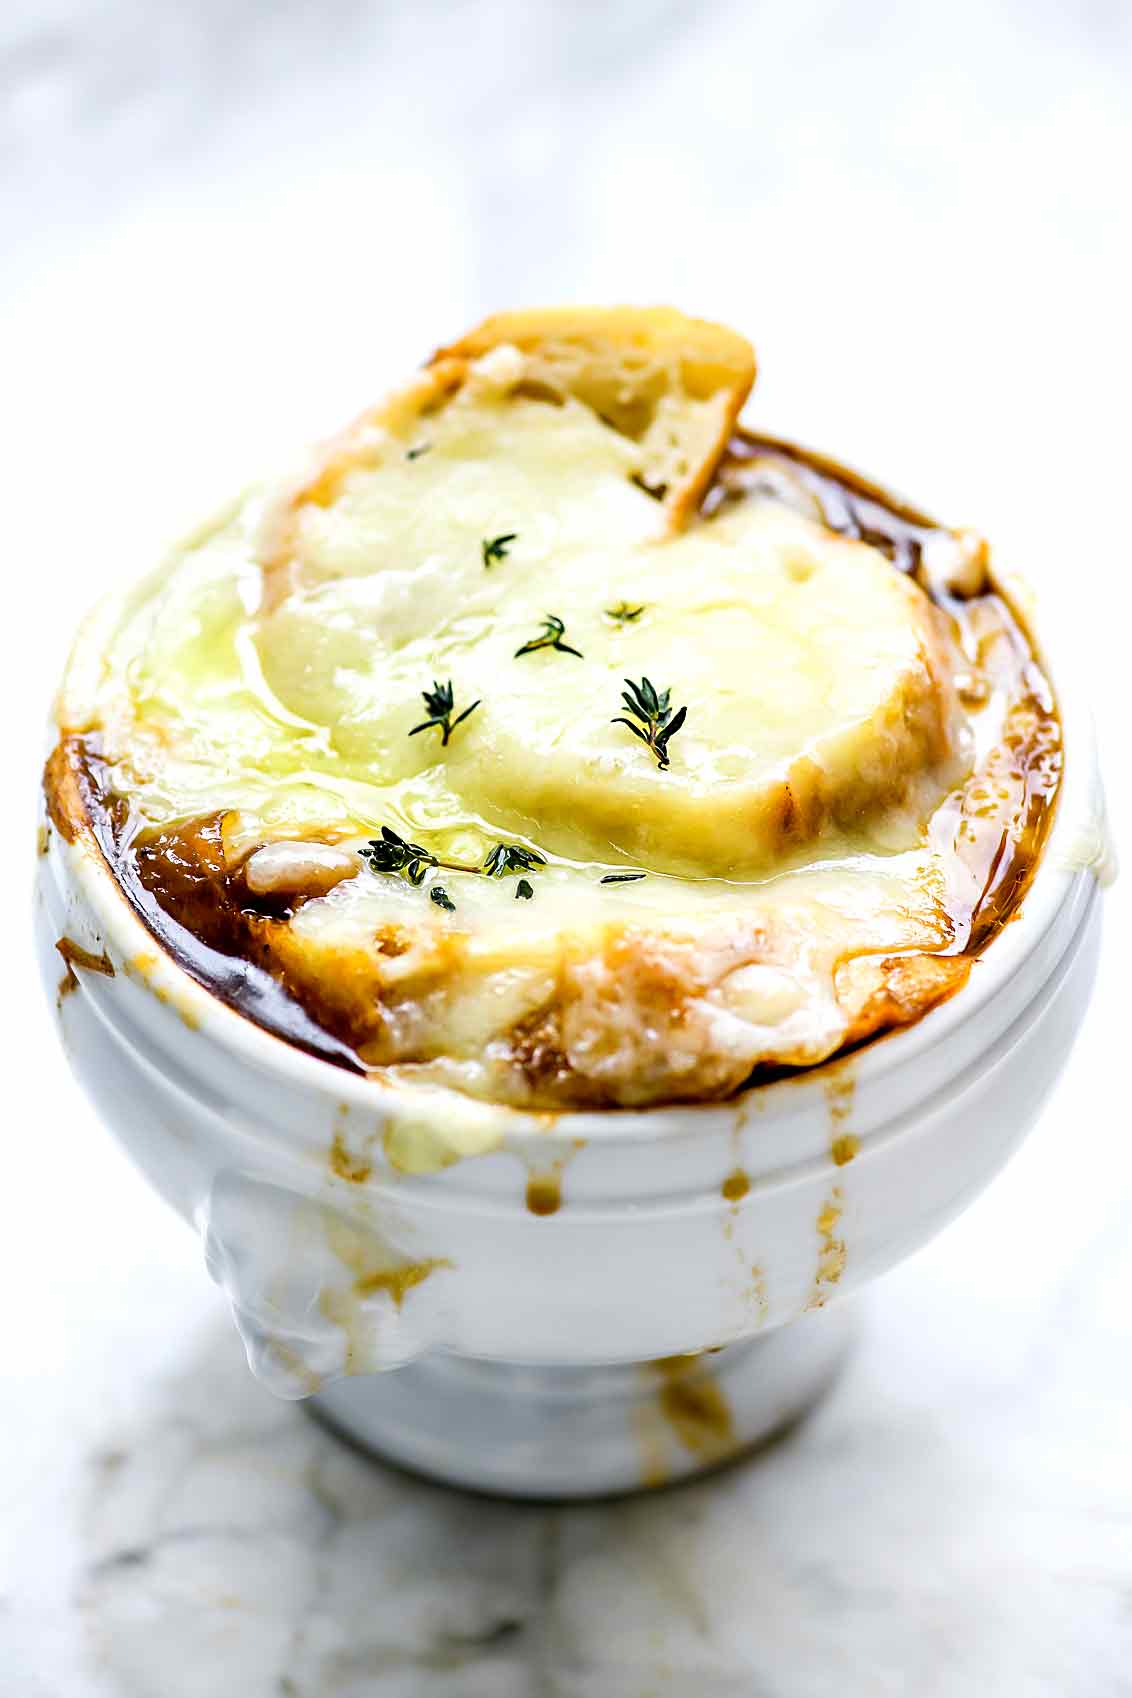 French Onion Soup Foodiecrush.com 027 1 